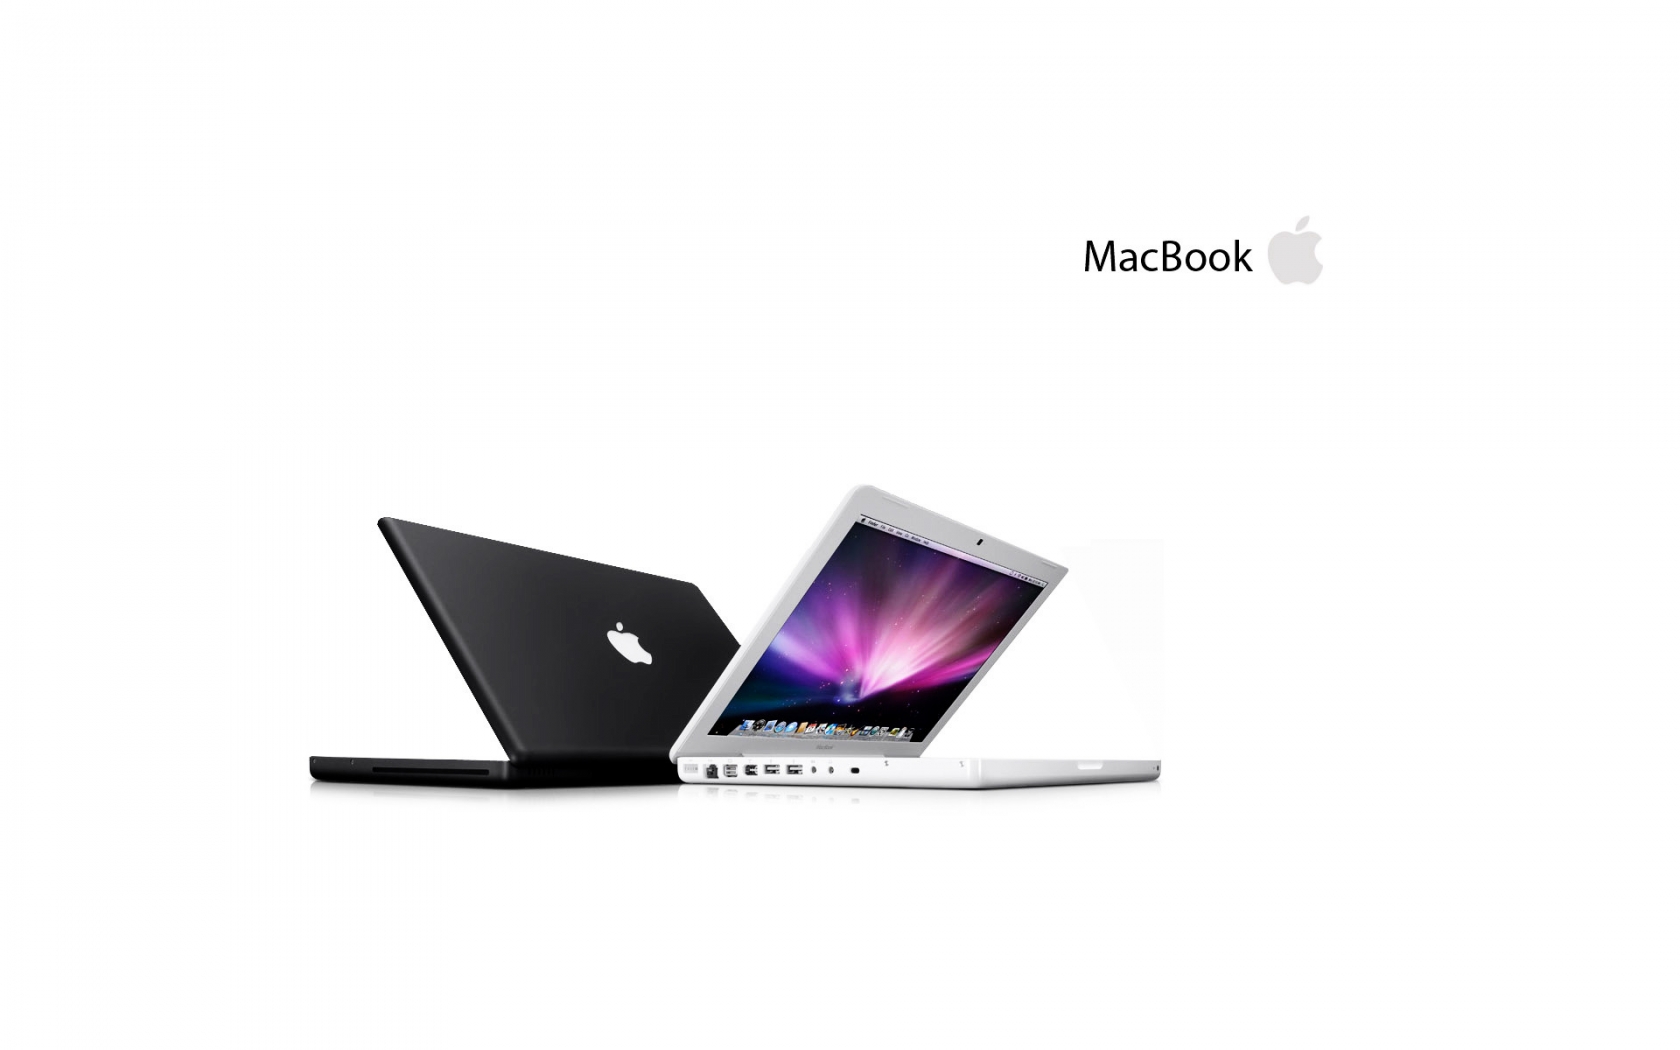 Apple MacBook for 1680 x 1050 widescreen resolution